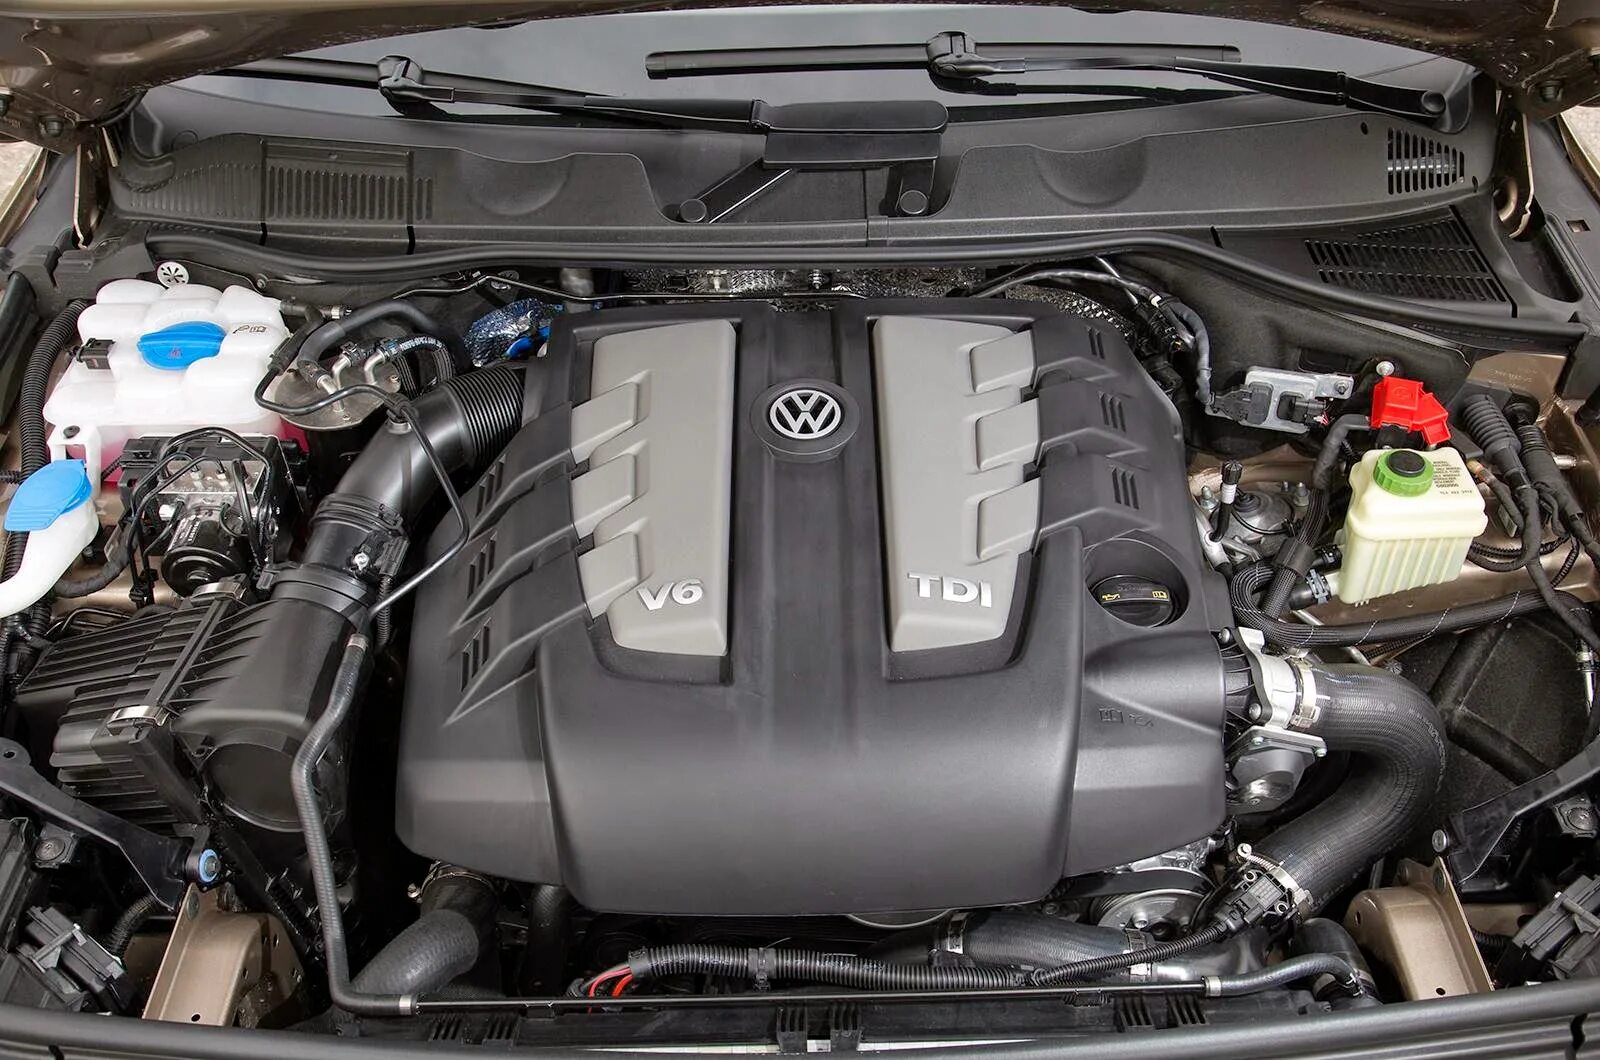 Volkswagen Touareg v6 TDI. Фольксваген Туарег в6 дизель. Туарег 3.0 дизель. Мотор Туарег 3.0 дизель.